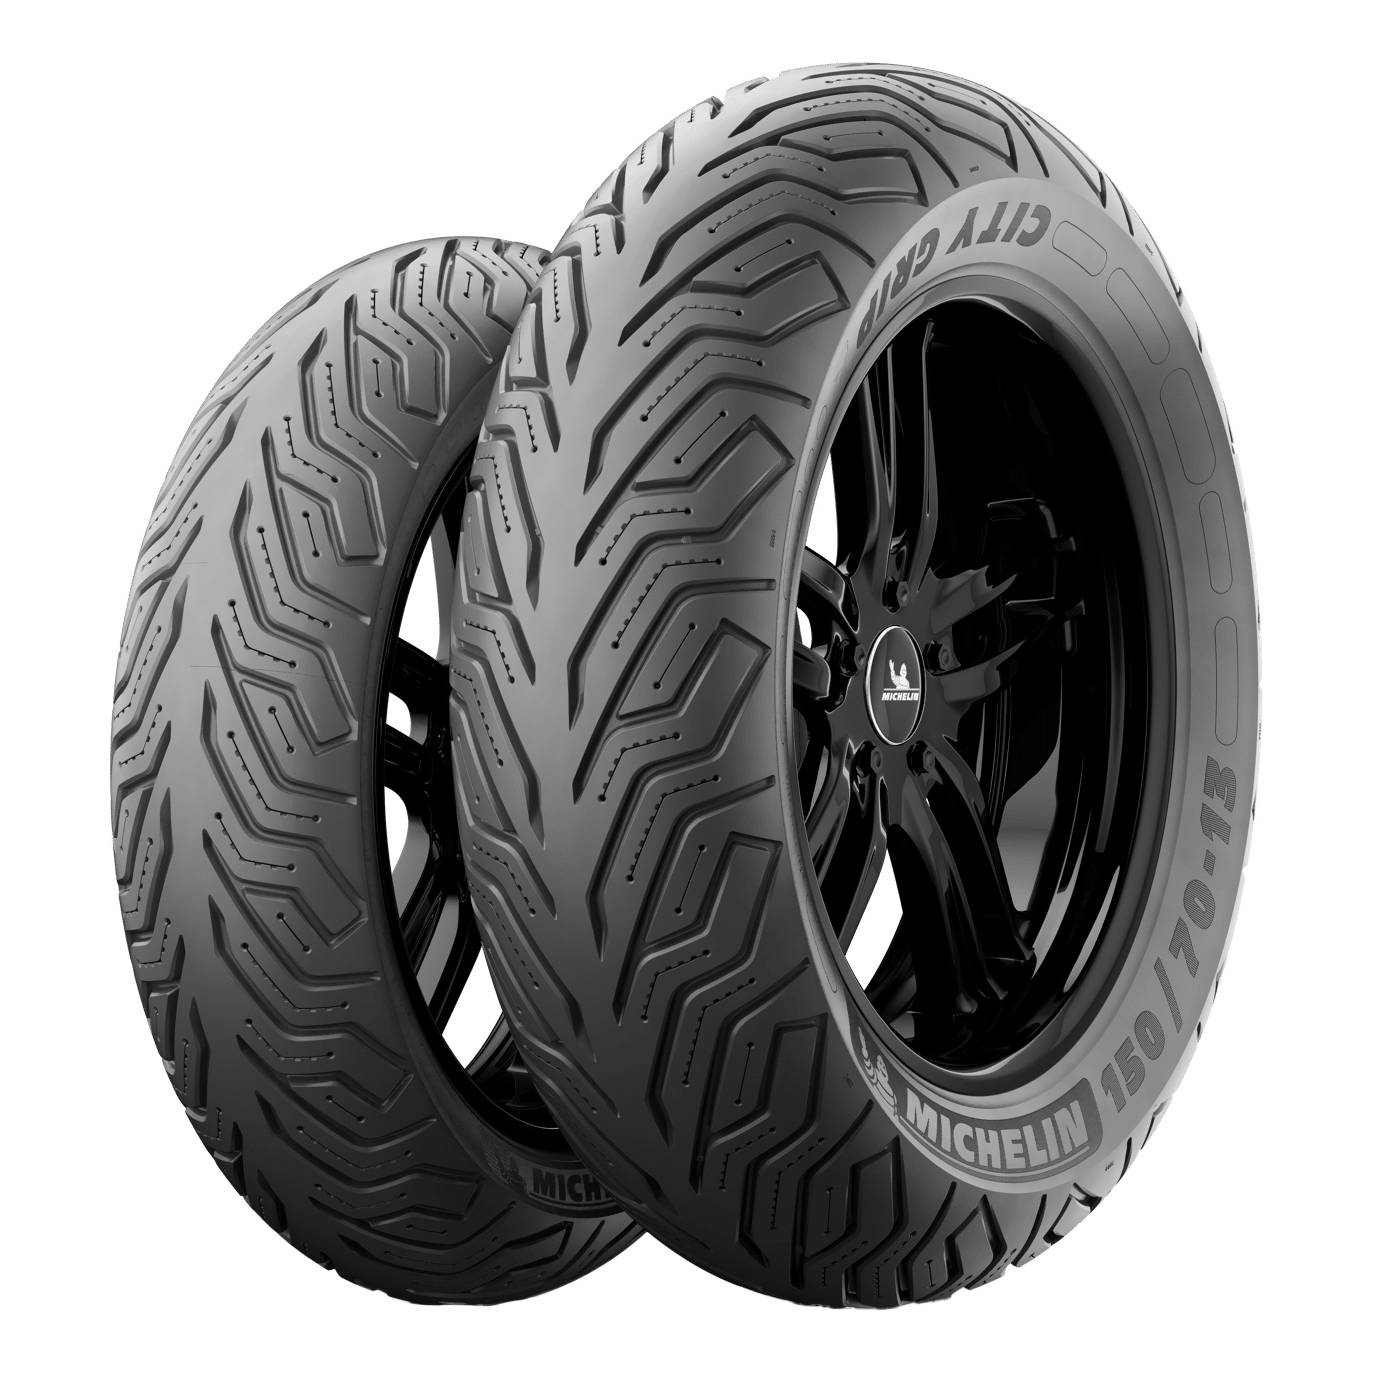 Coupe transversale d'un pneu Michelin (www.michelin.fr